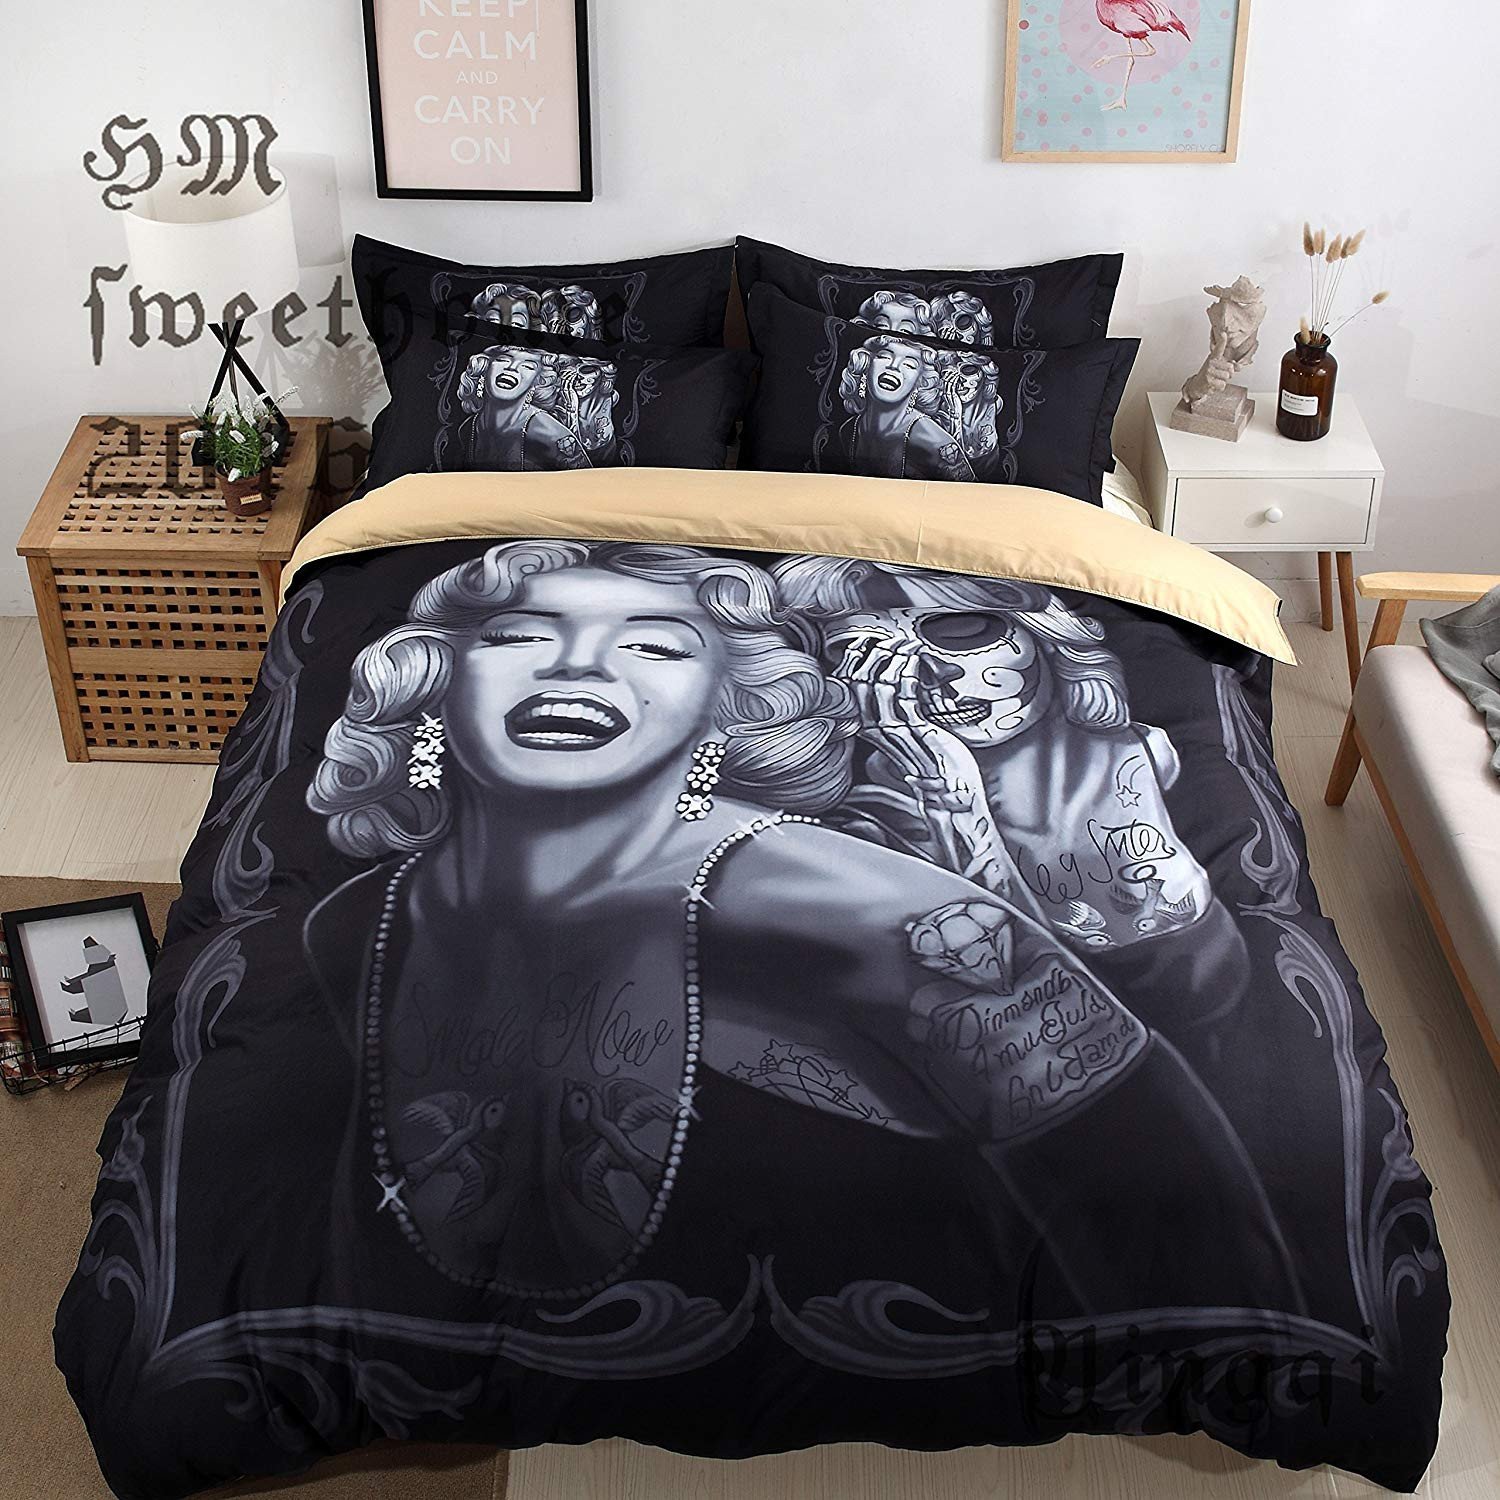 Marilyn Monroe Bedroom Set Awesome Amazon Home4joys Mask Skull with Tattoo Marilyn Monroe